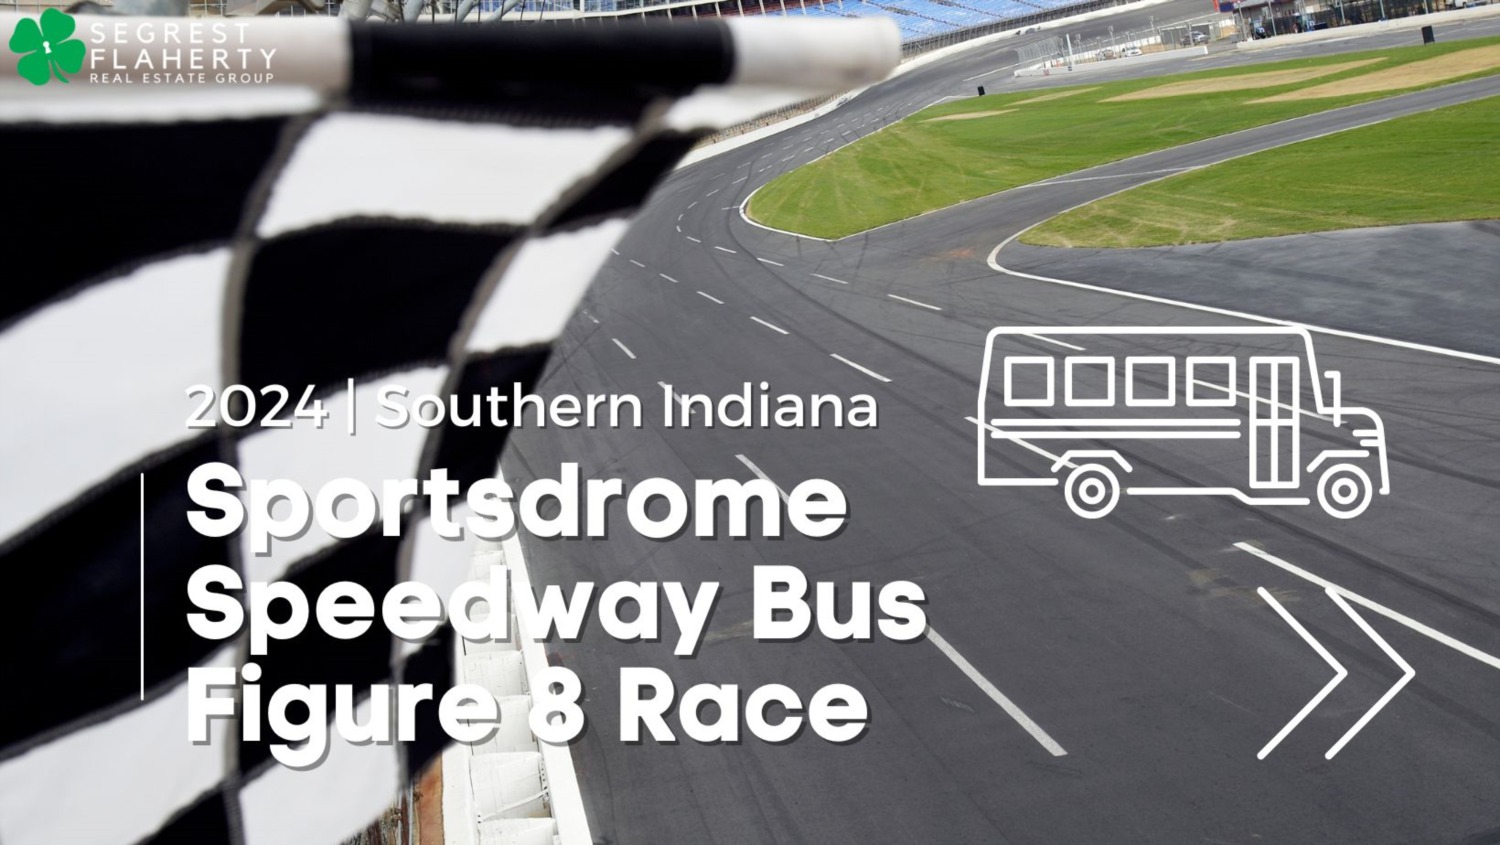 Sportsdrome Speedway Bus Figure